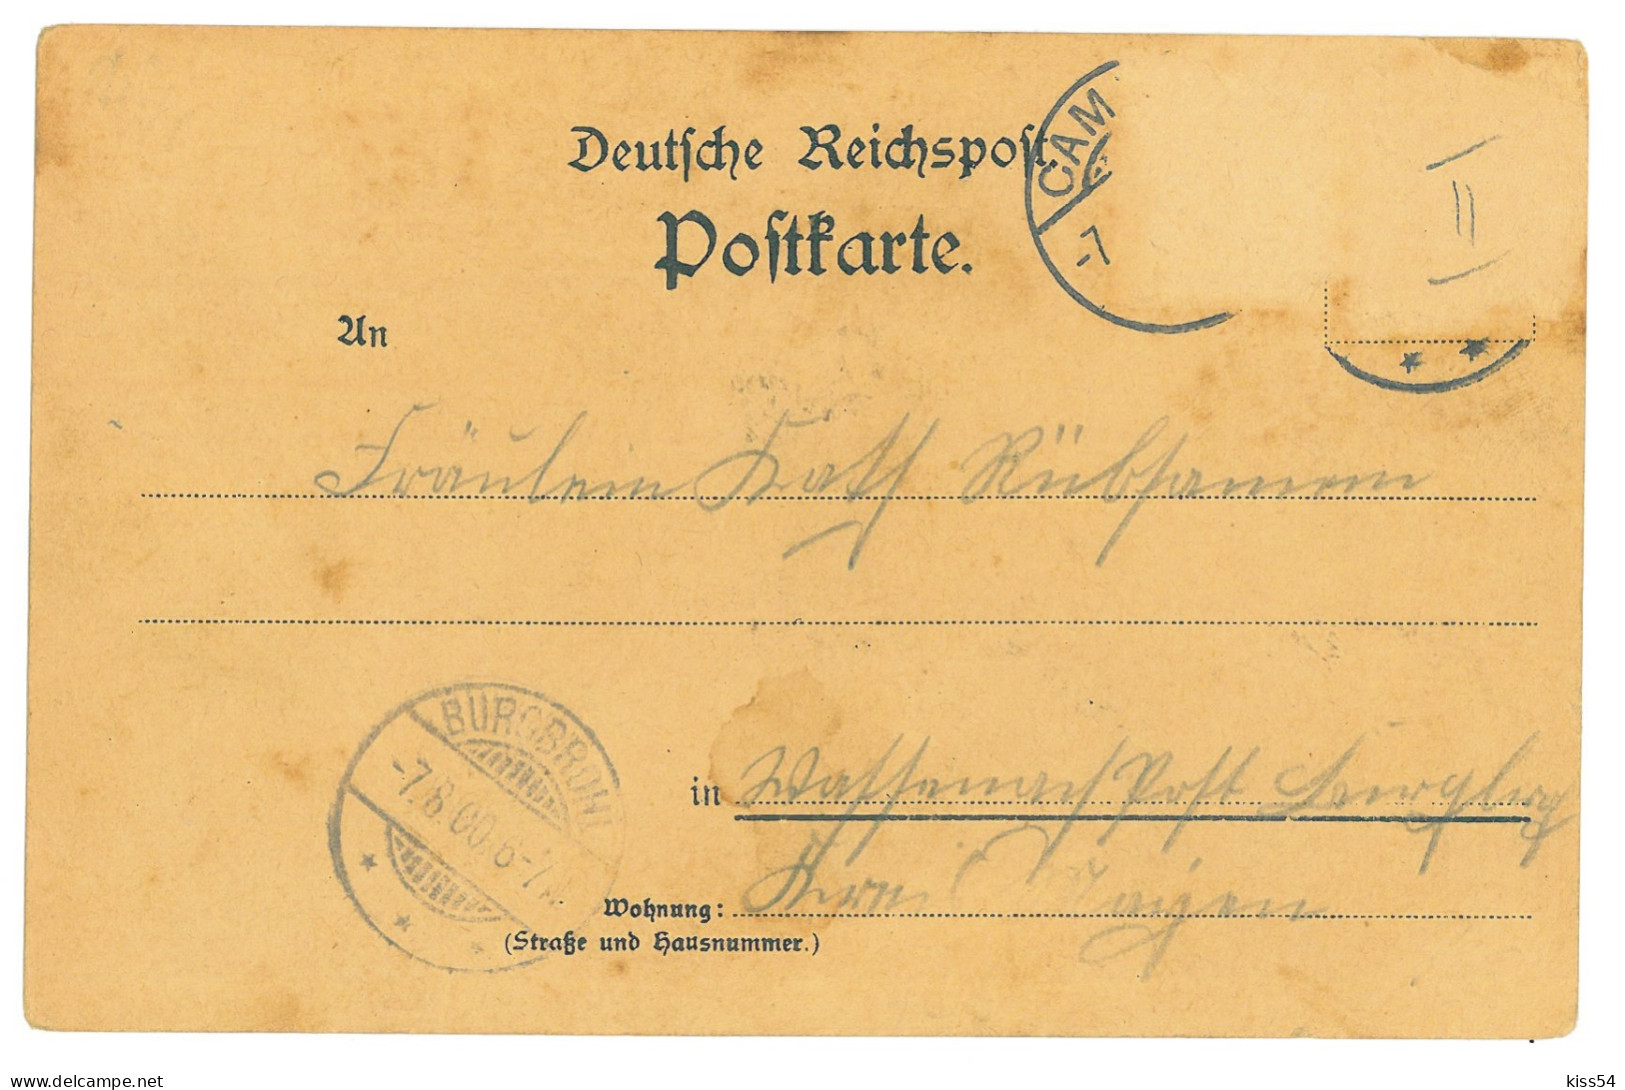 GER 58 - 17249 REMSCHEID, Litho, Germany - Old Postcard - Used - 1900 - Remscheid